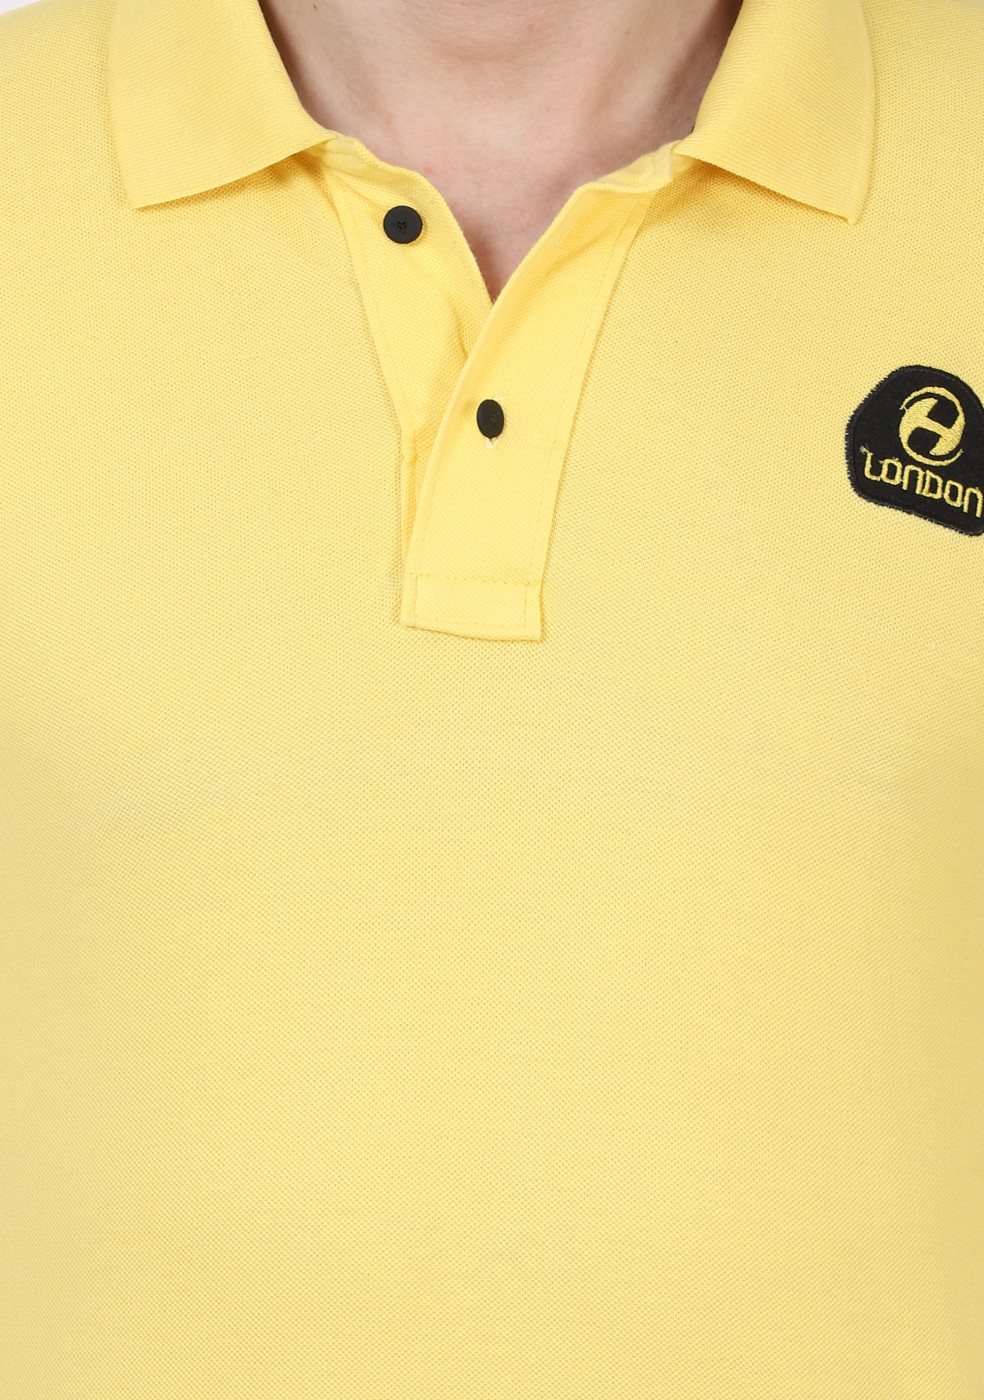 Collar Casual Wear Stylish Matty Slim Fit Polo T- Shirt For Men